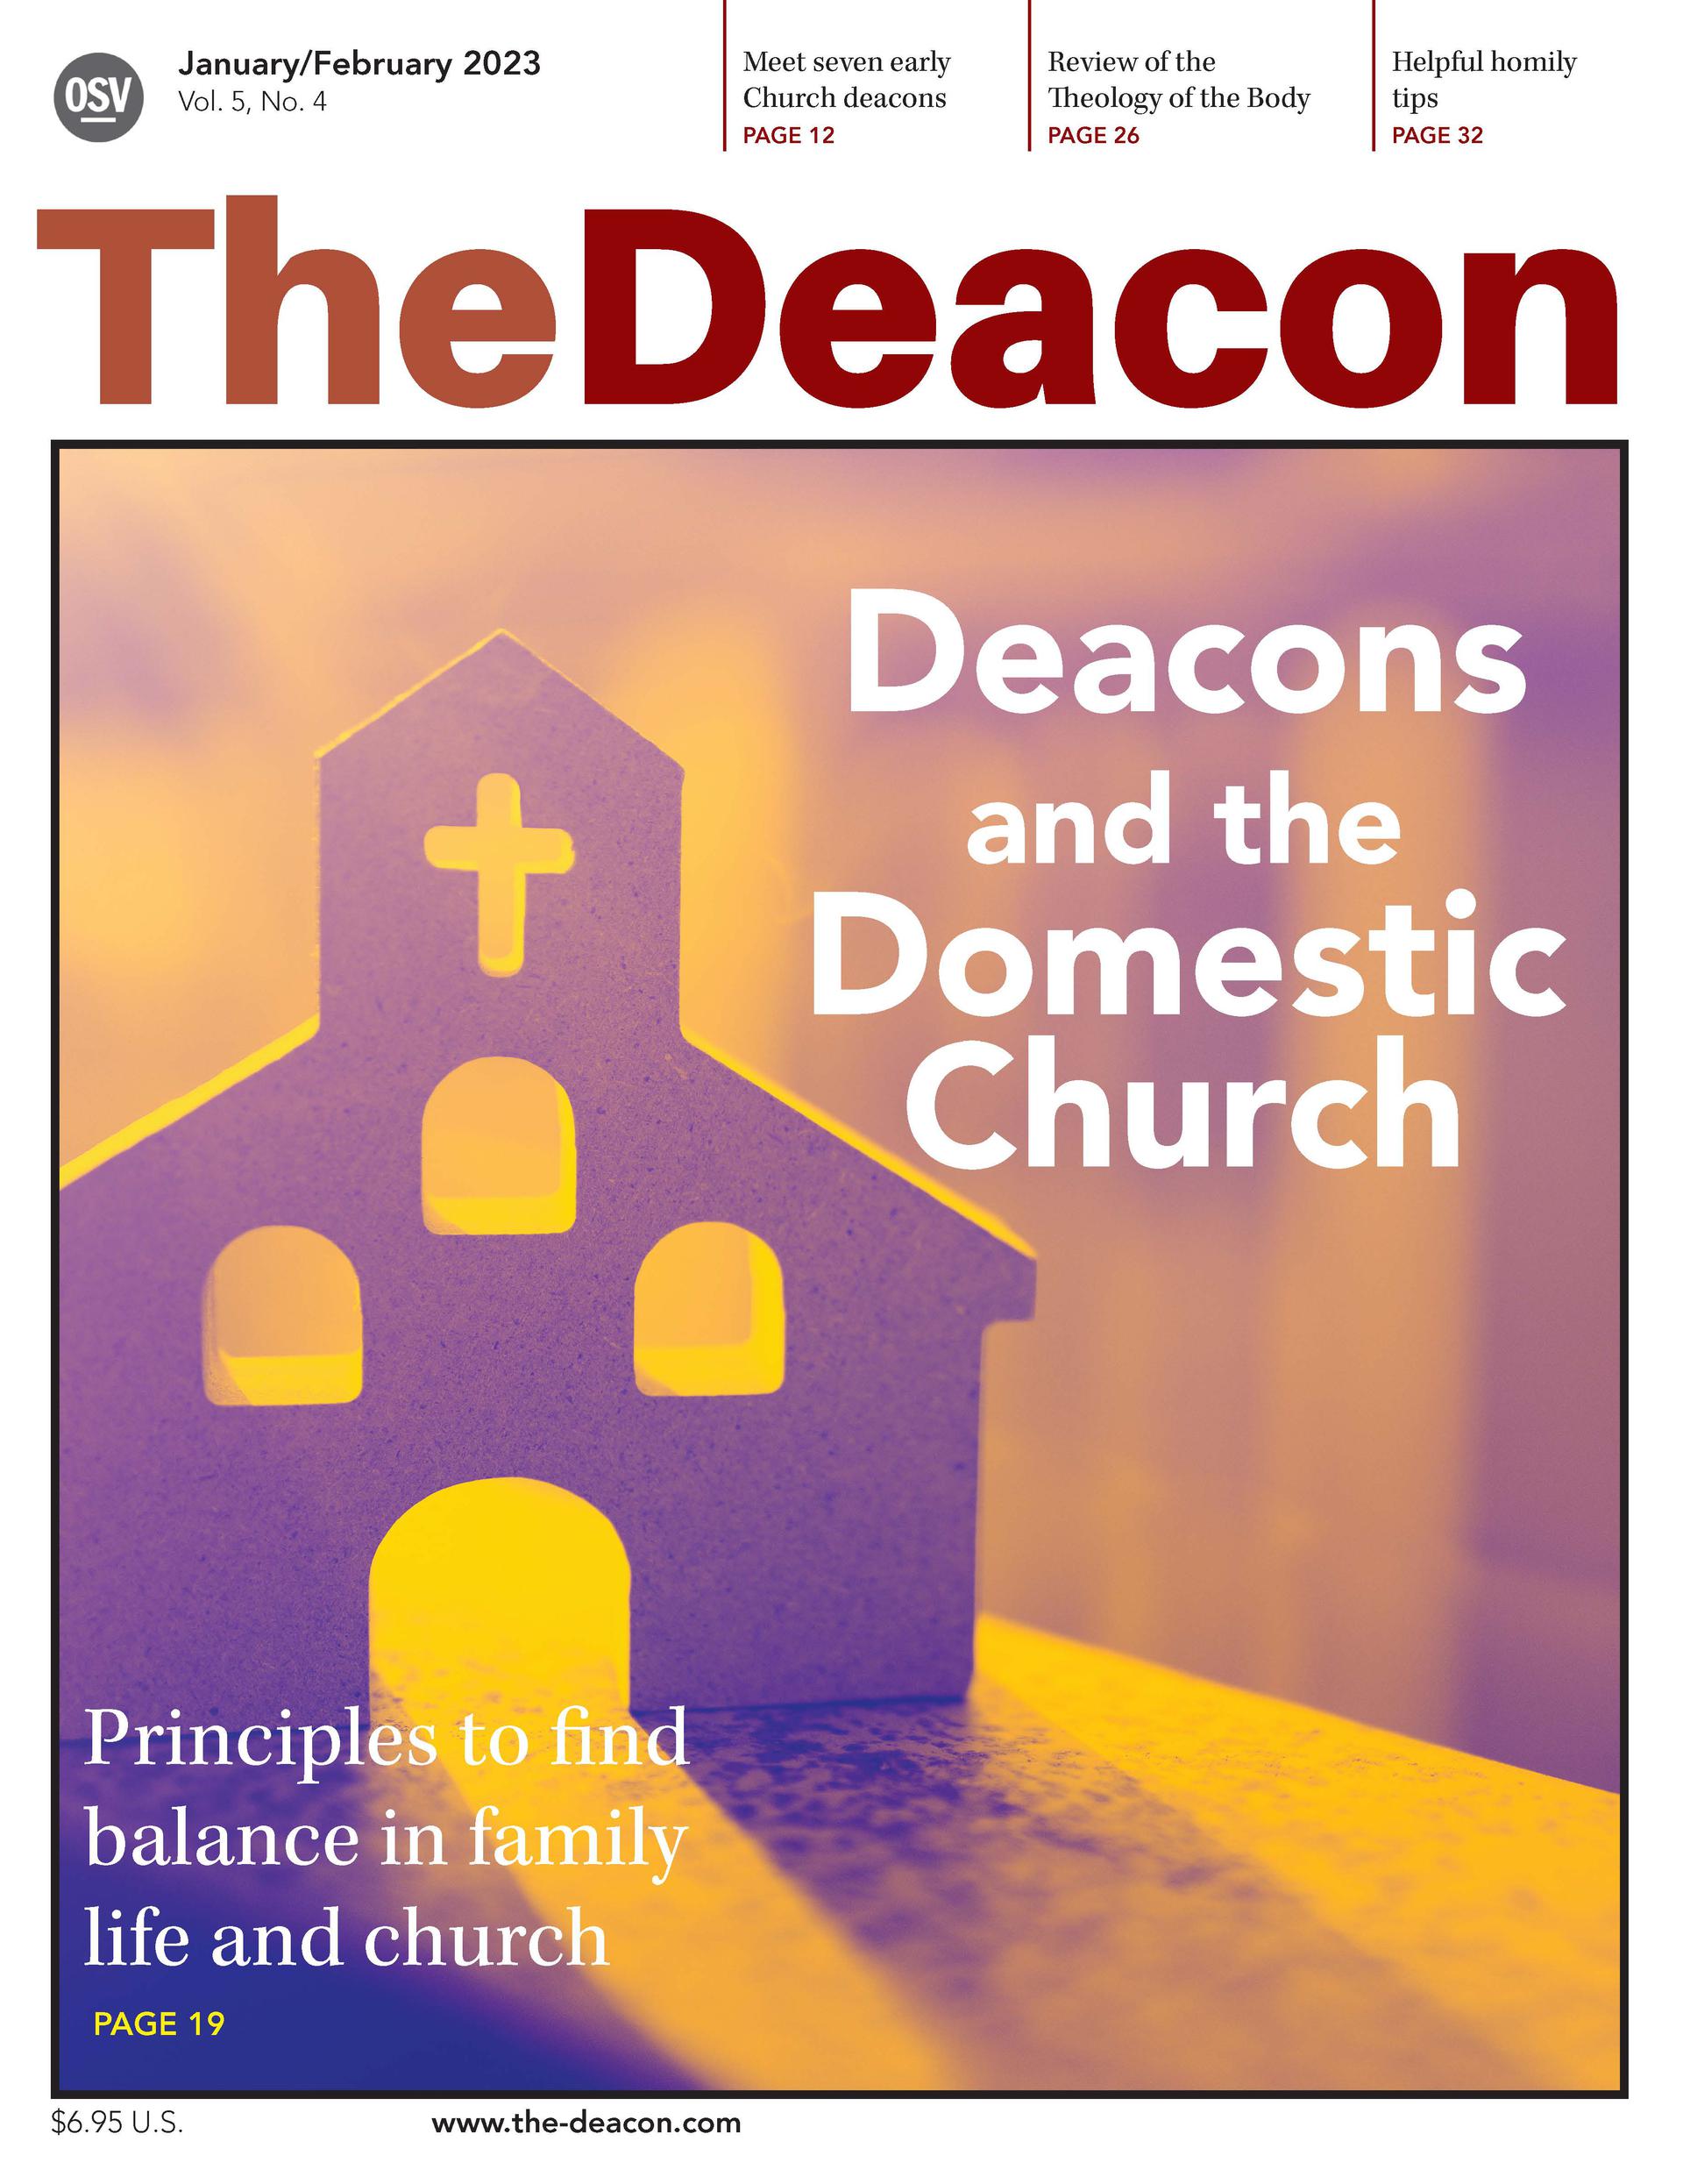 The Deacon magazine